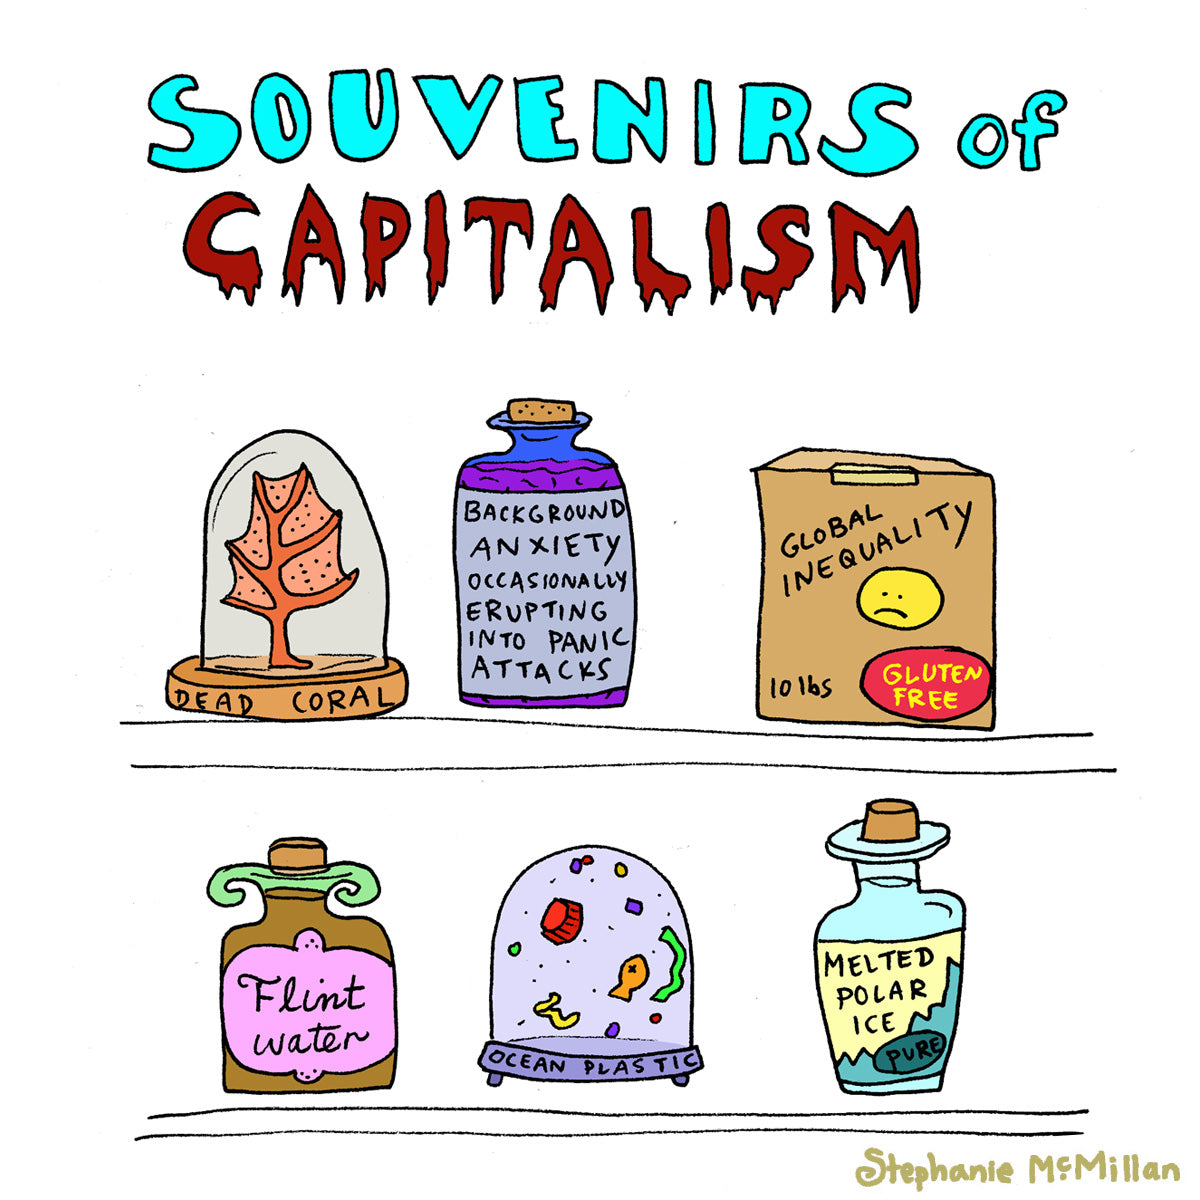 Souvenirs of Capitalism